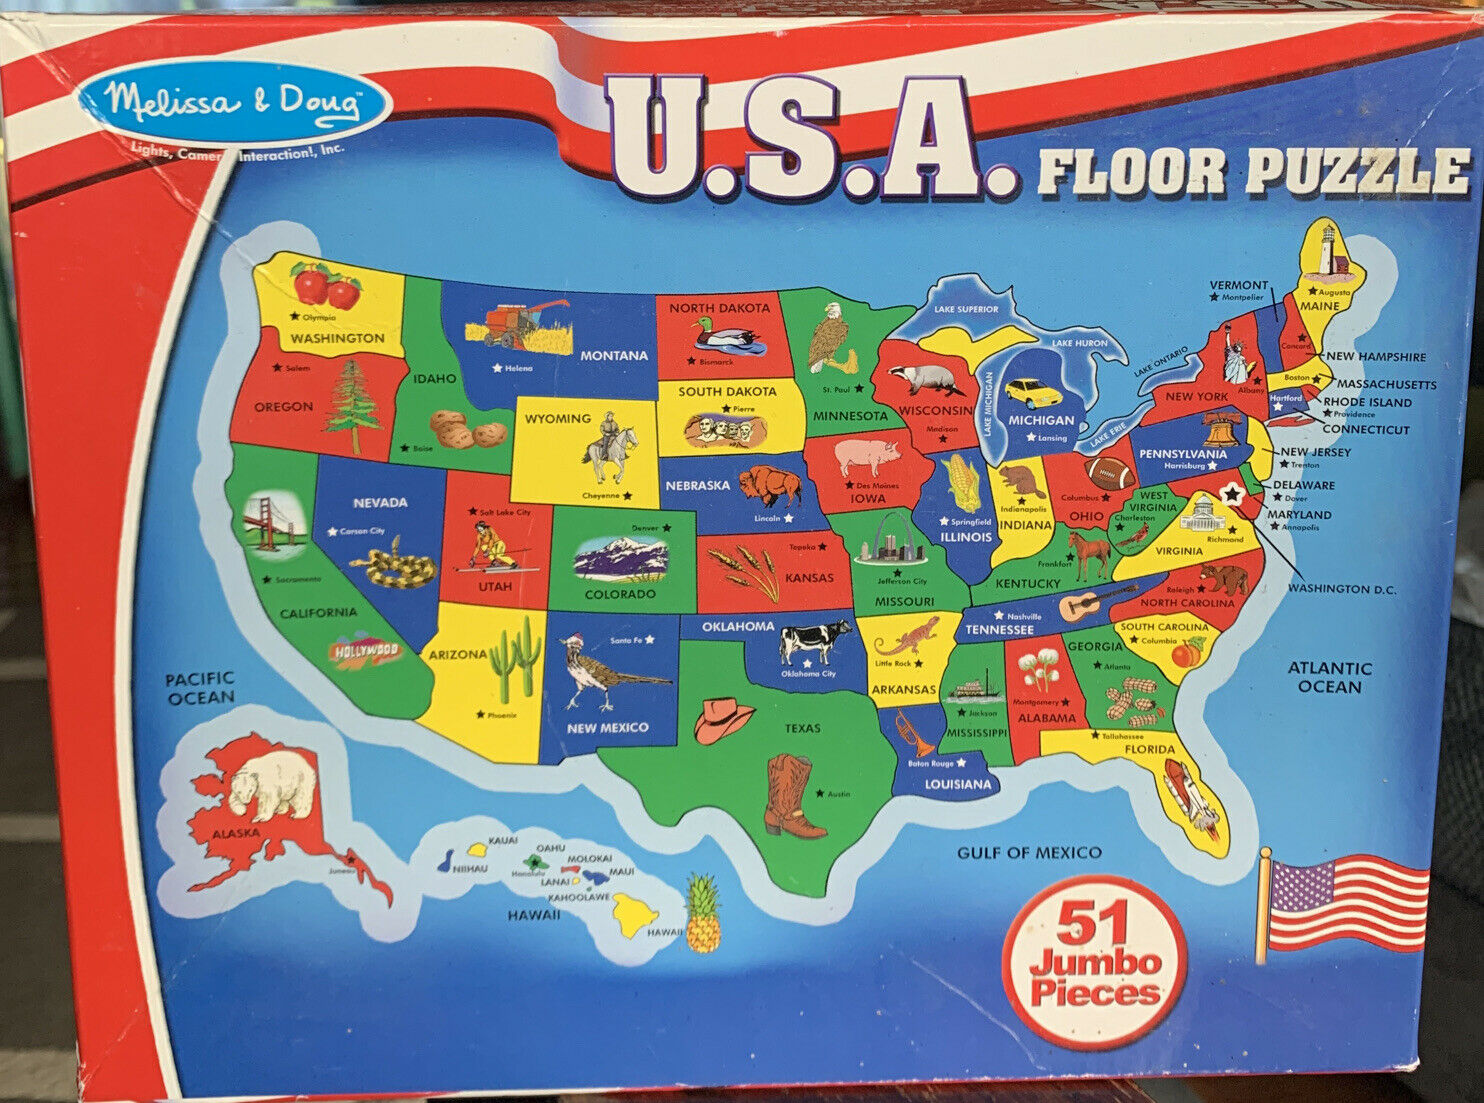 Melissa and Doug USA United States Map Floor Puzzle 51 Jumbo Pieces 2x3 Feet